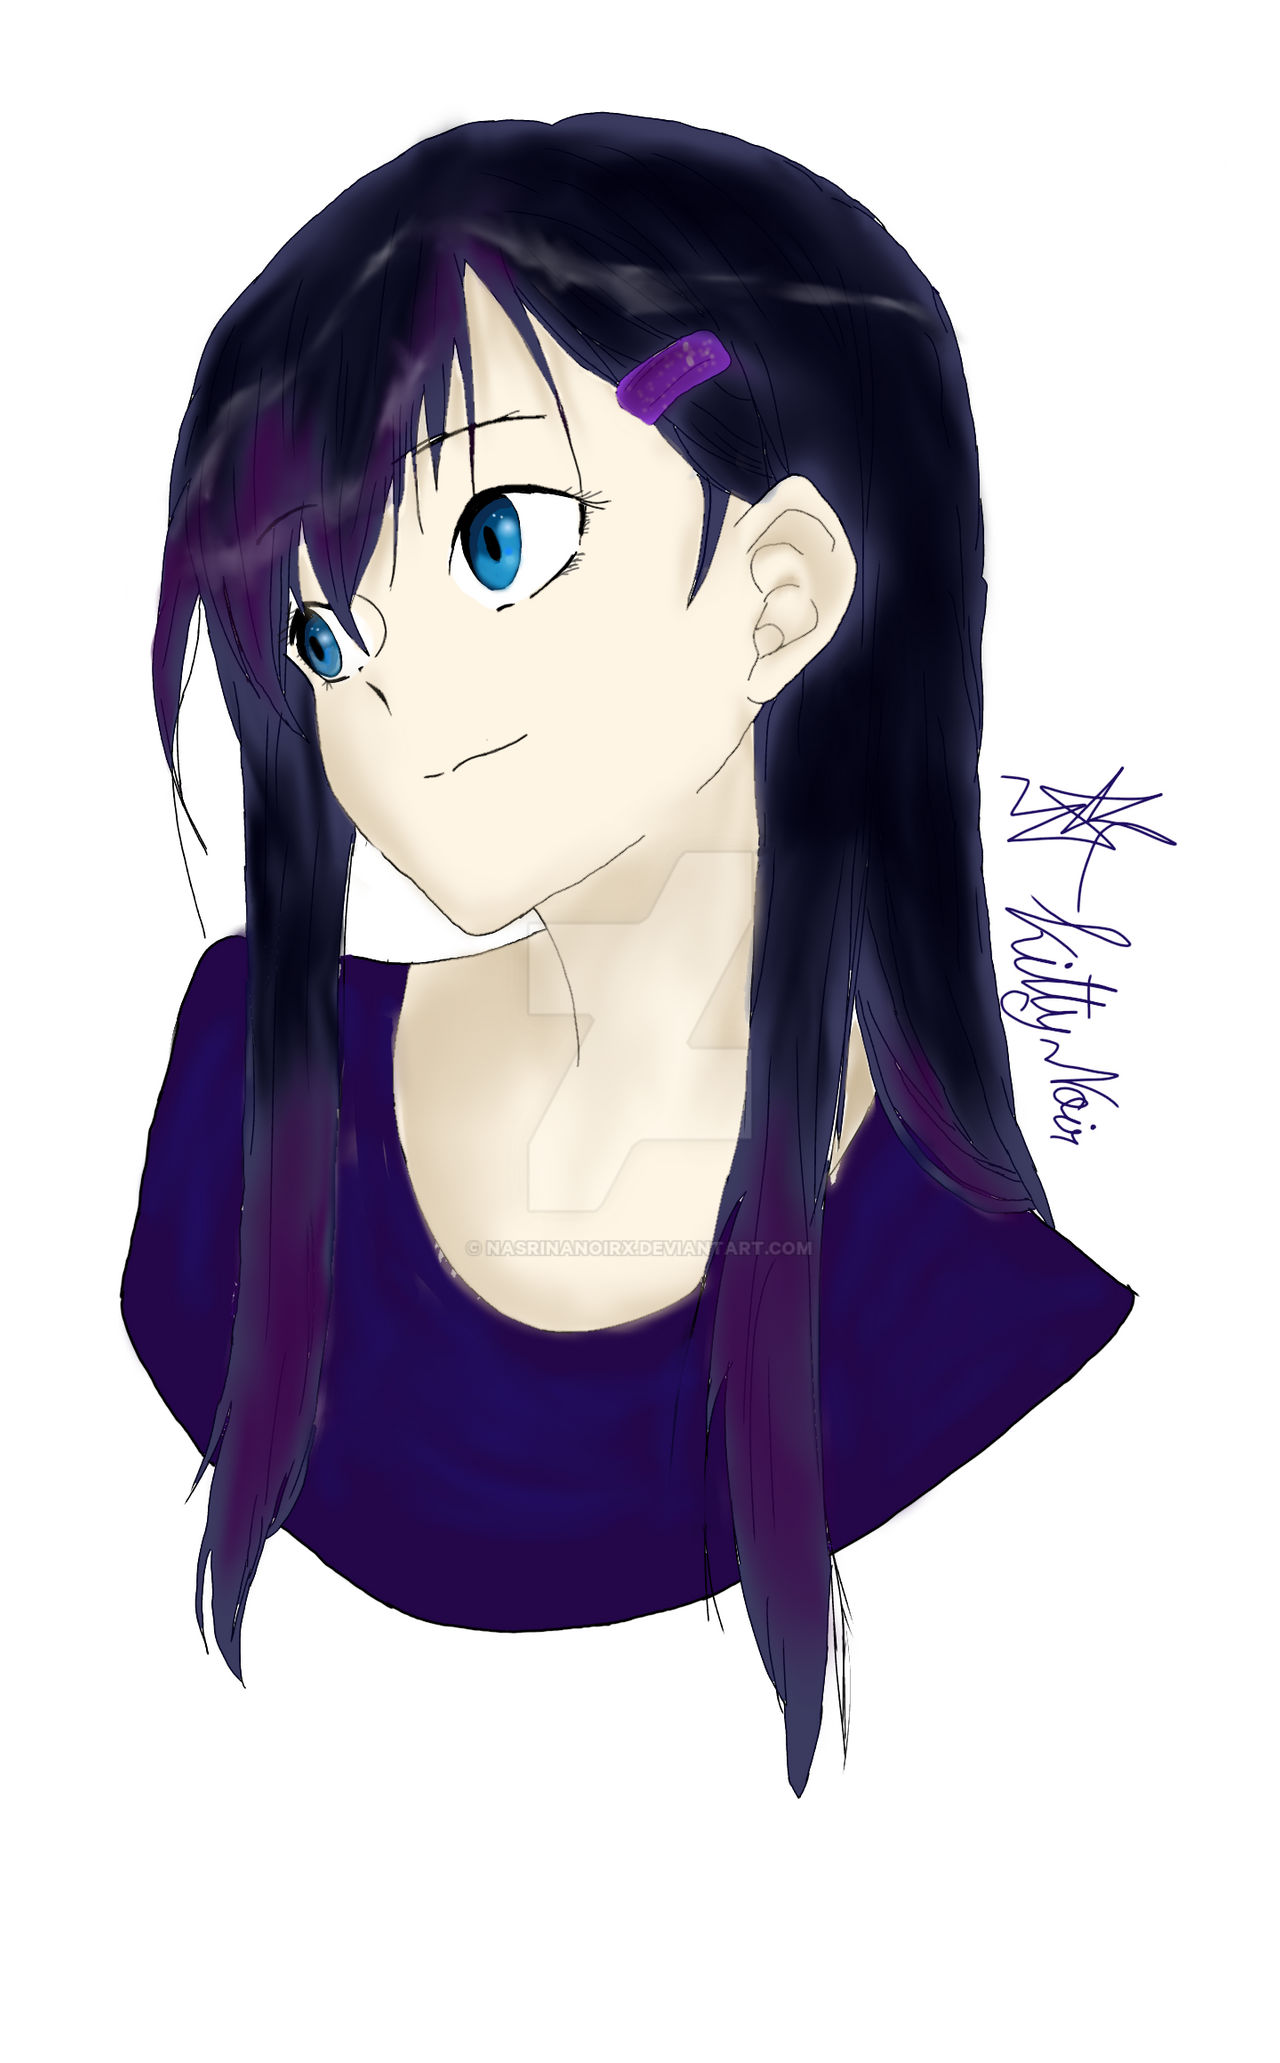 Anime Girl with Black'n purple hair with blue eyes by NasrinAnoirX on  DeviantArt